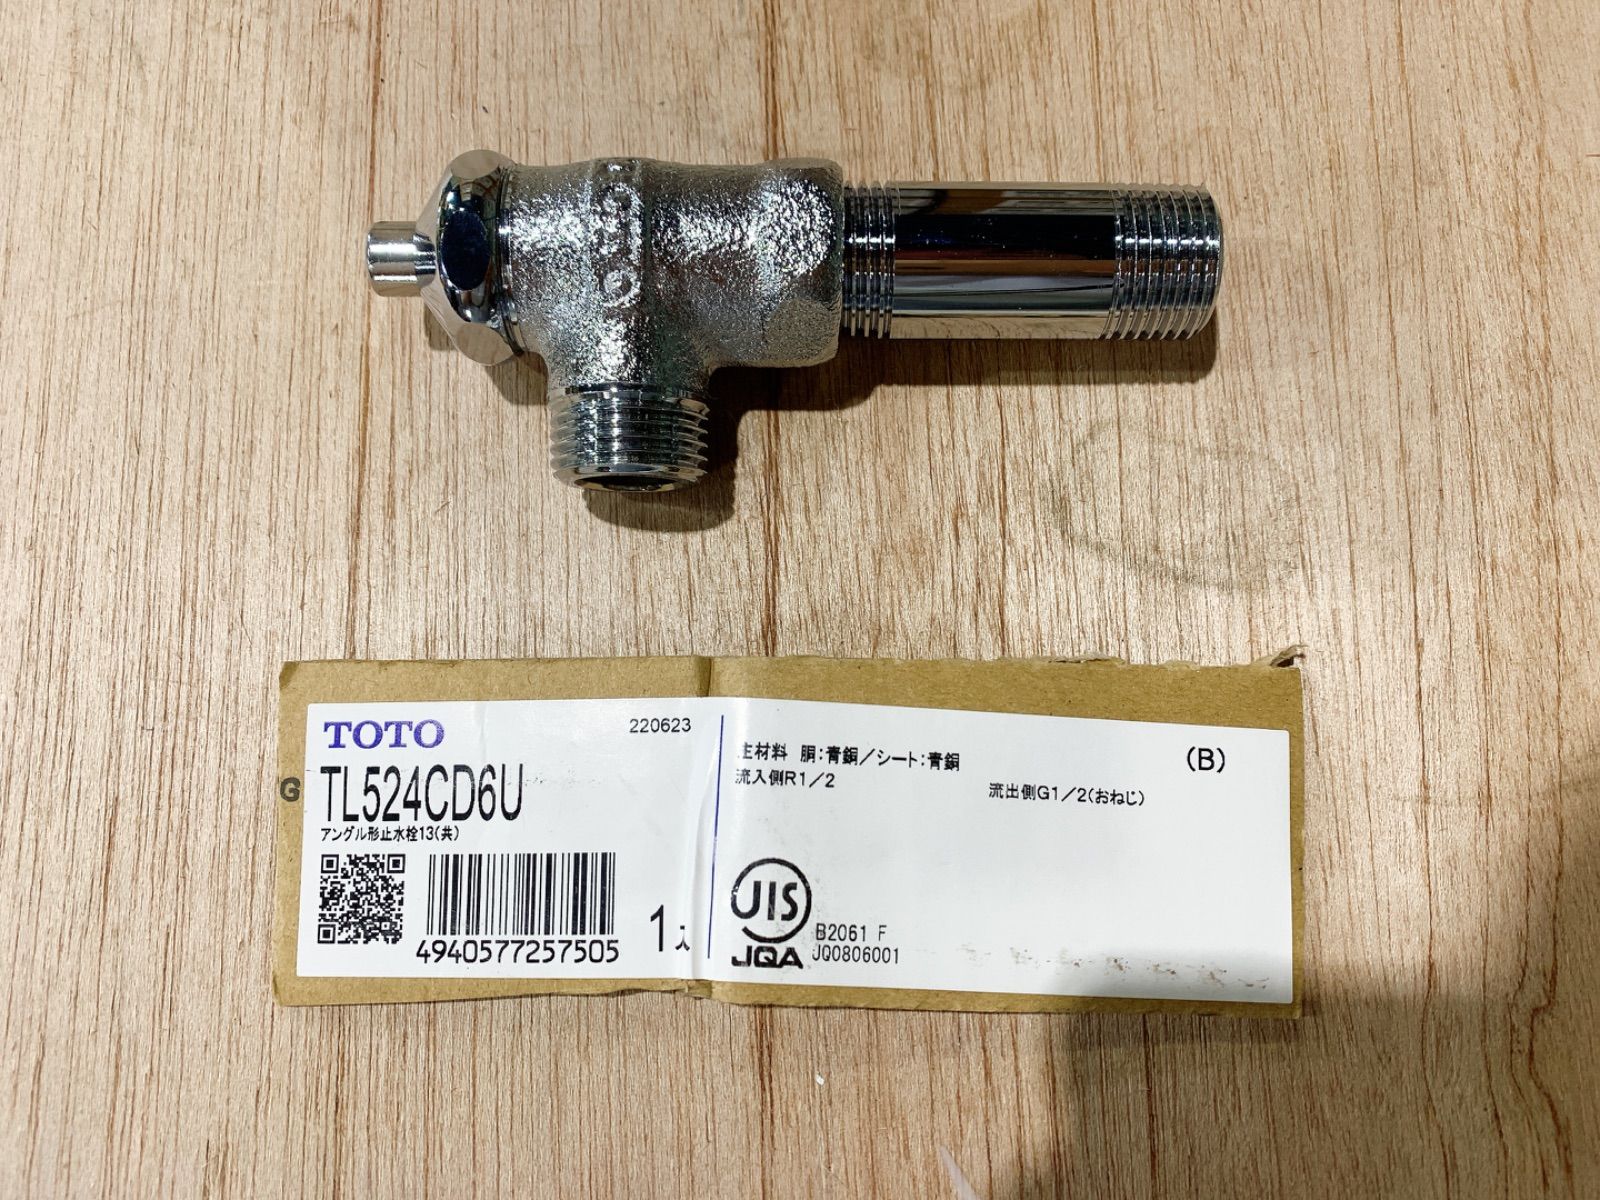 TOTO アングル形止水栓(共用) TL524CD6U - 配管用部品